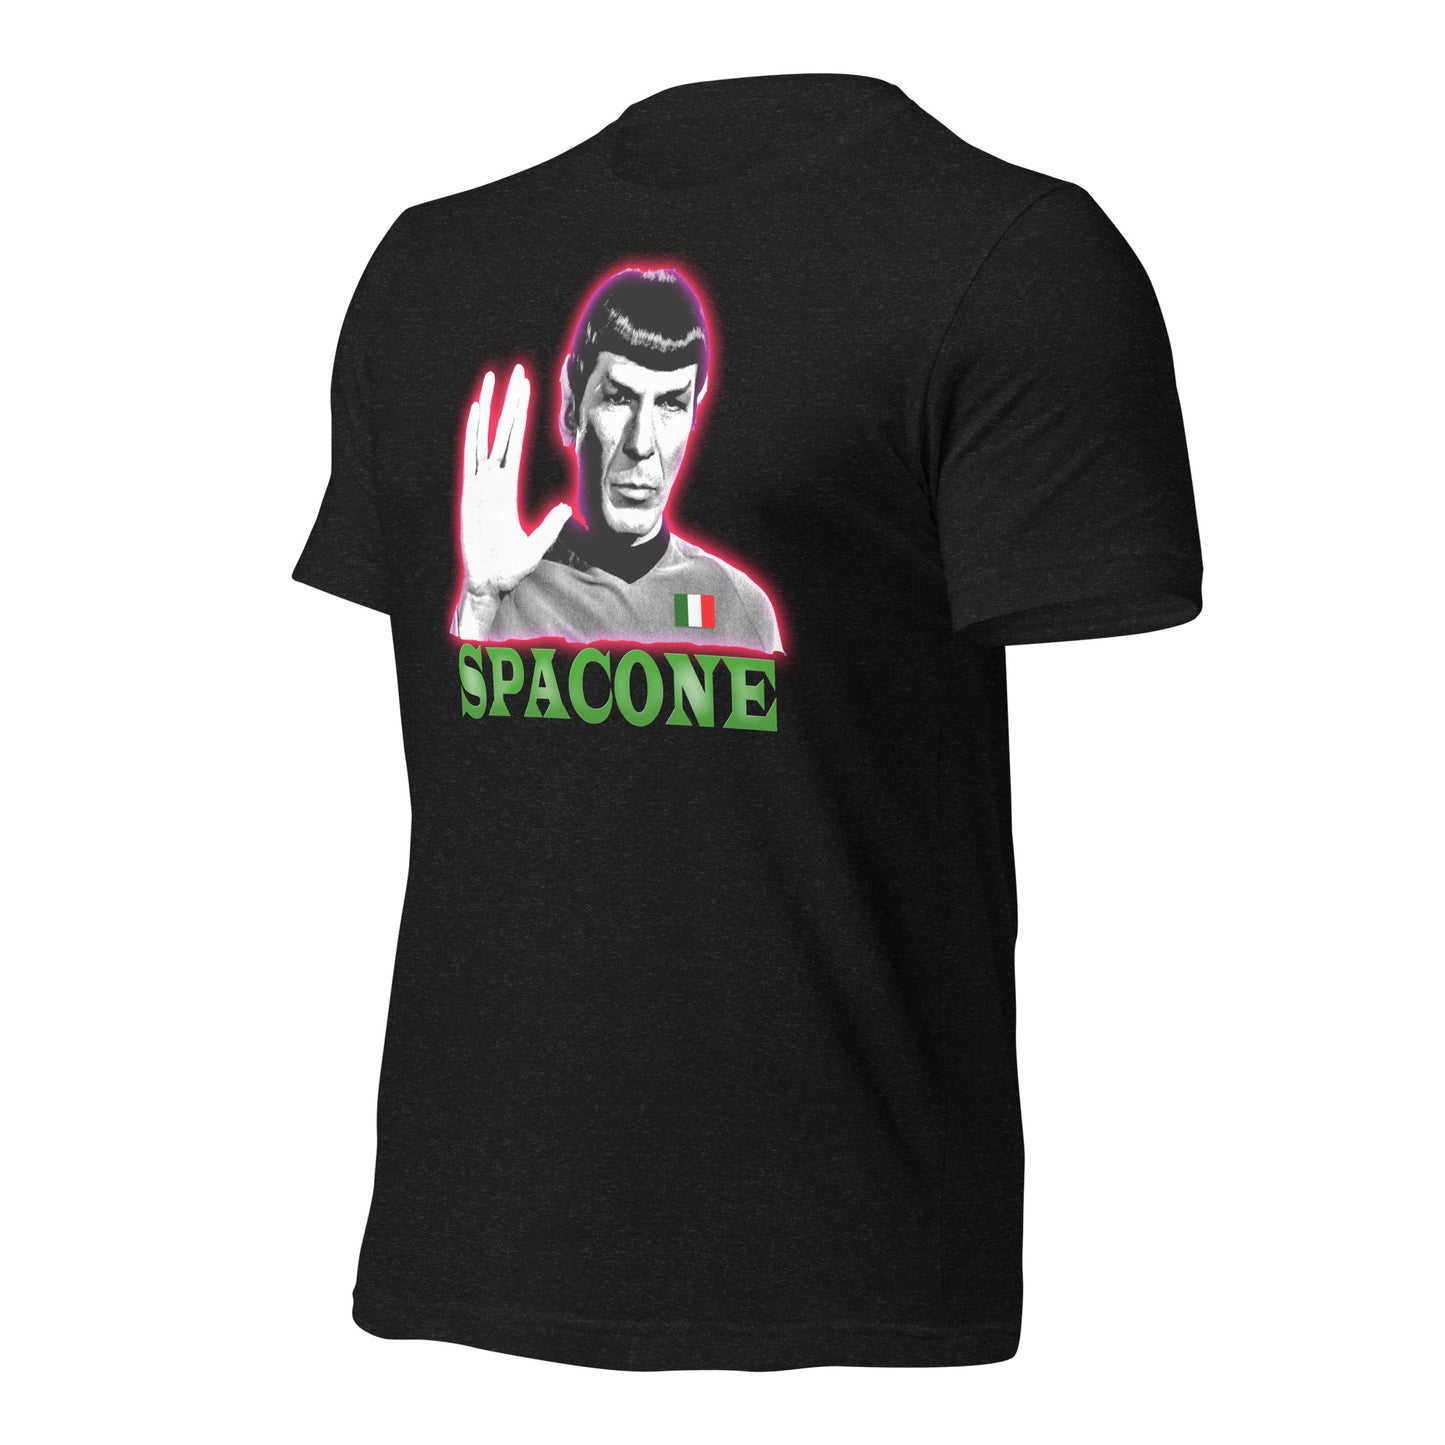 Spacone - Unisex t-shirt